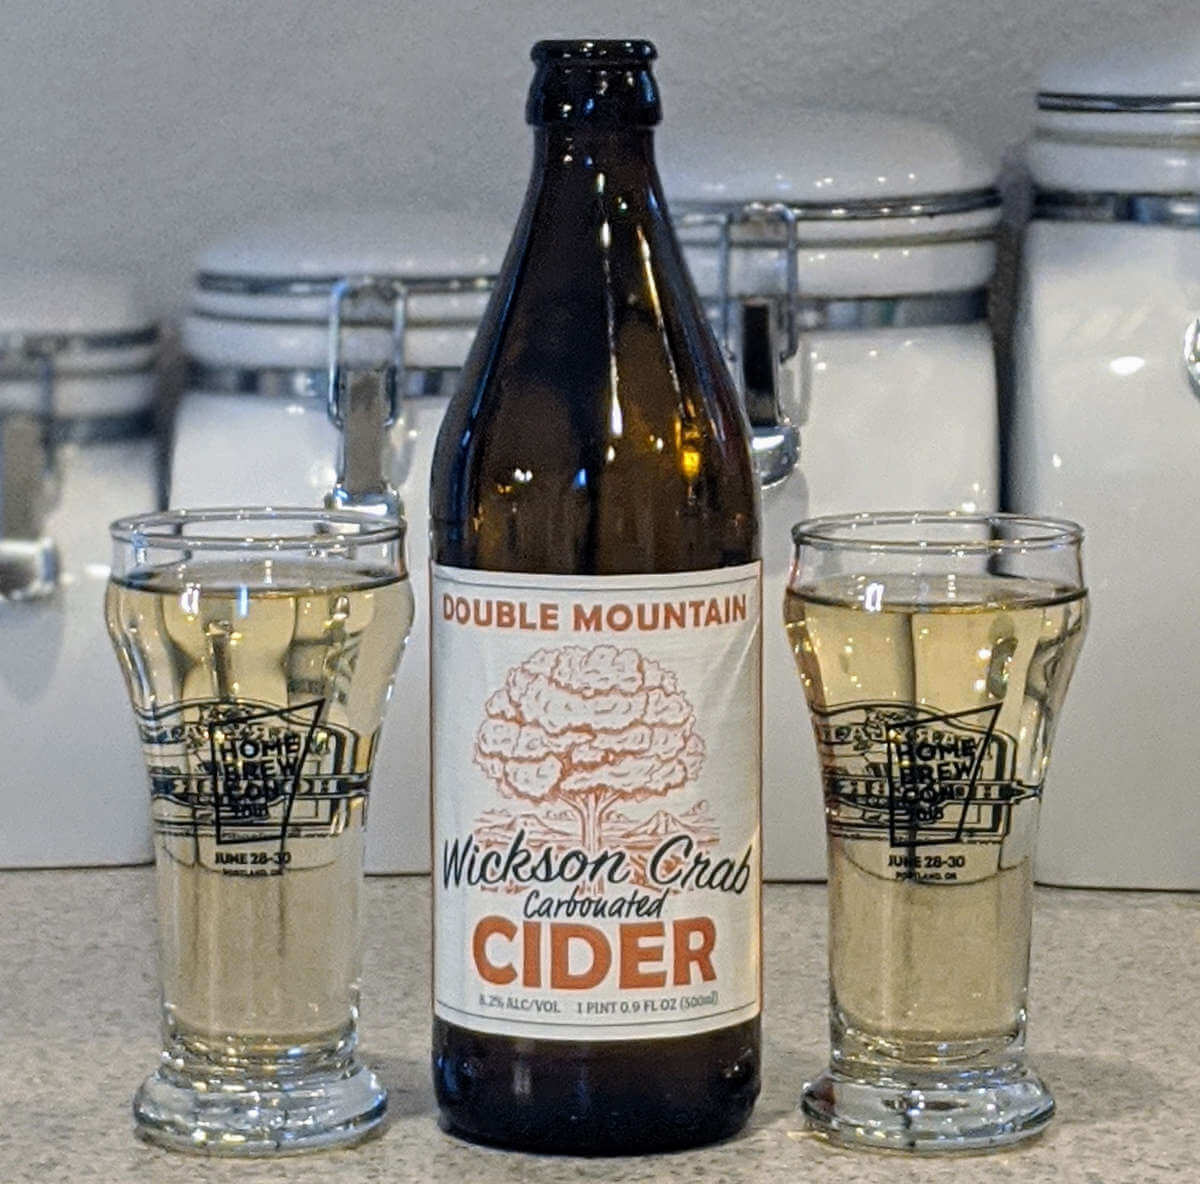 Double Mountain Wickson Crab Cider